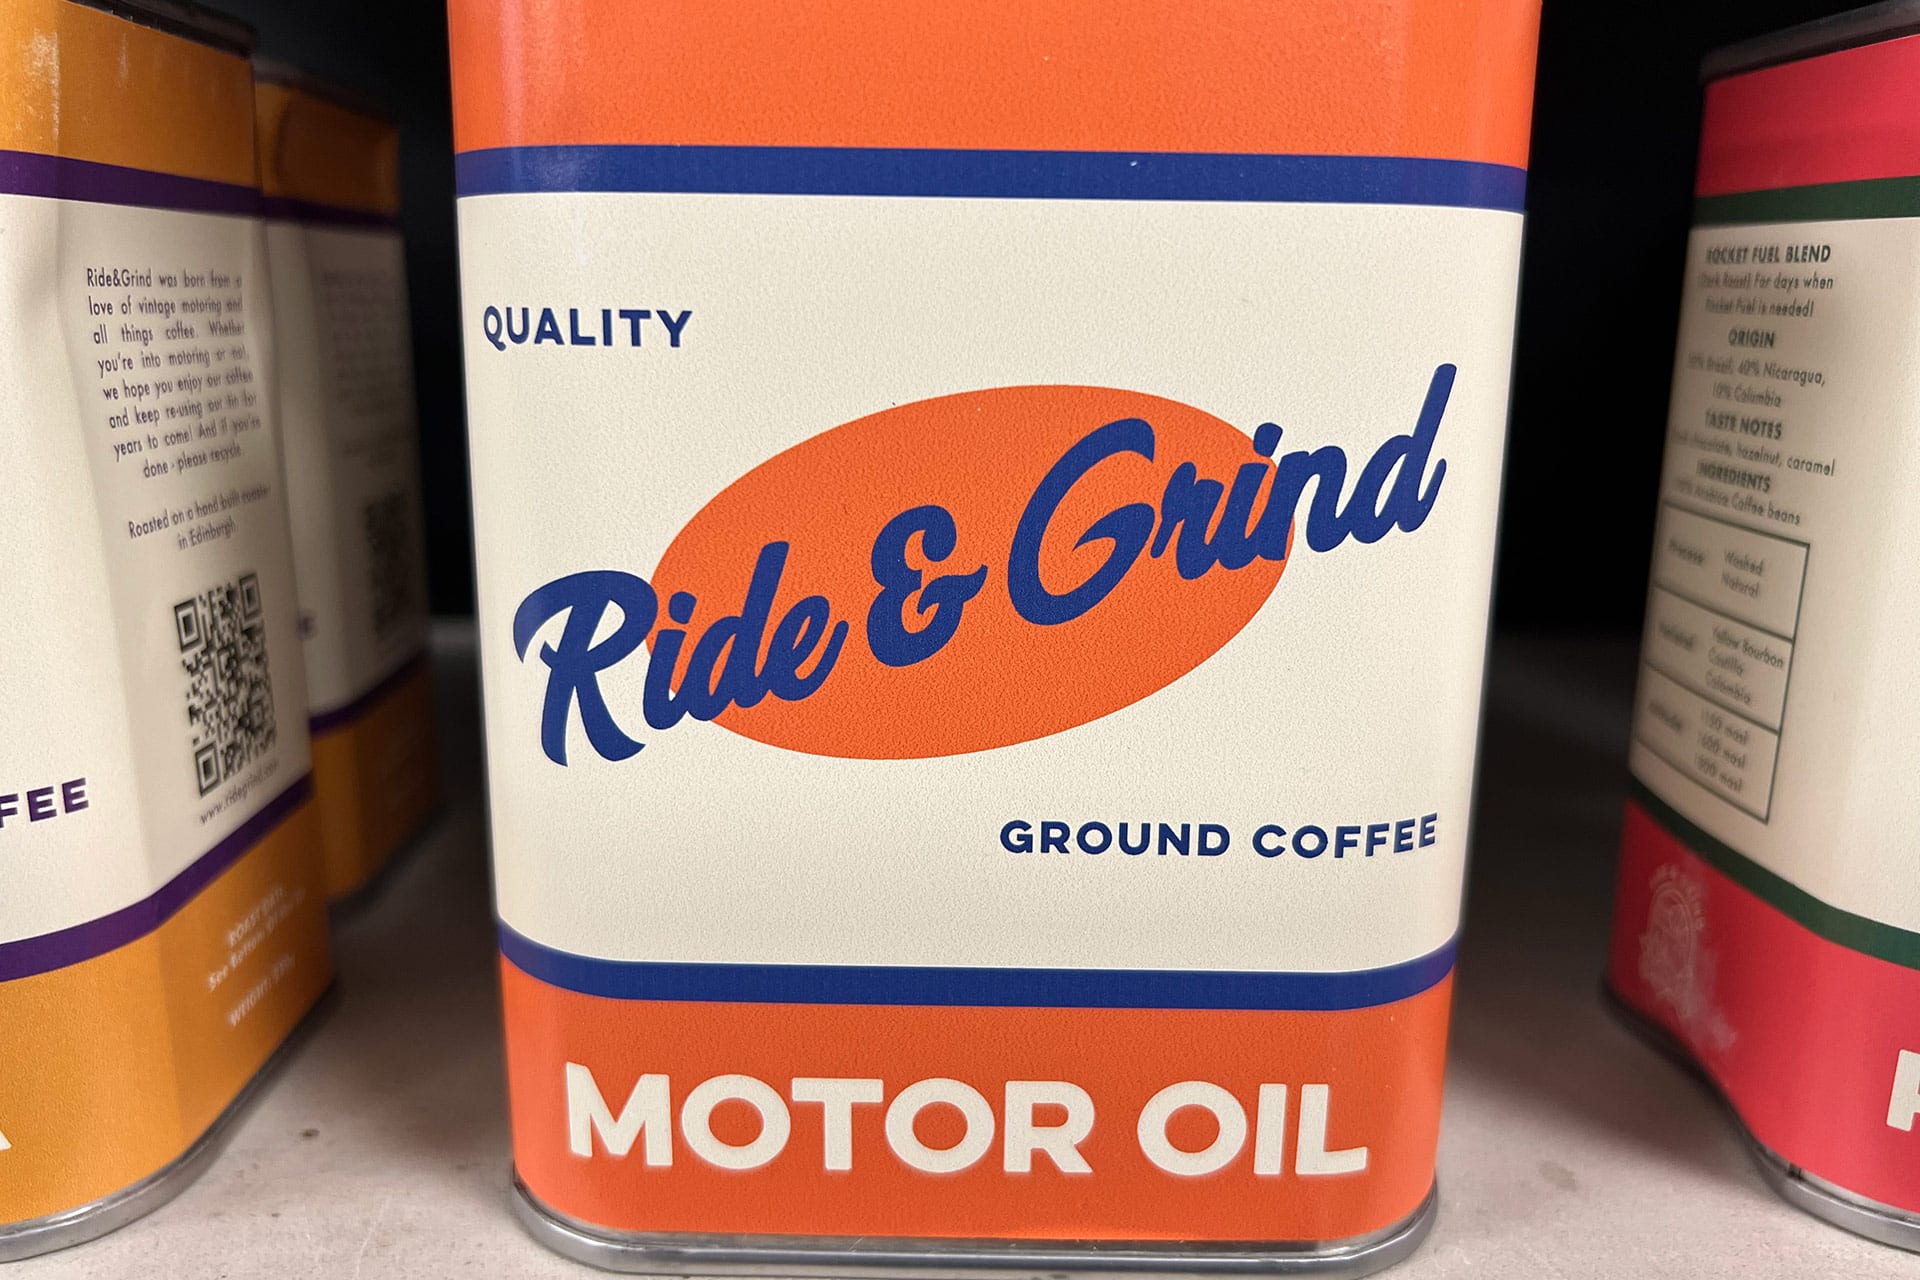 Motor Oil Ground Coffee